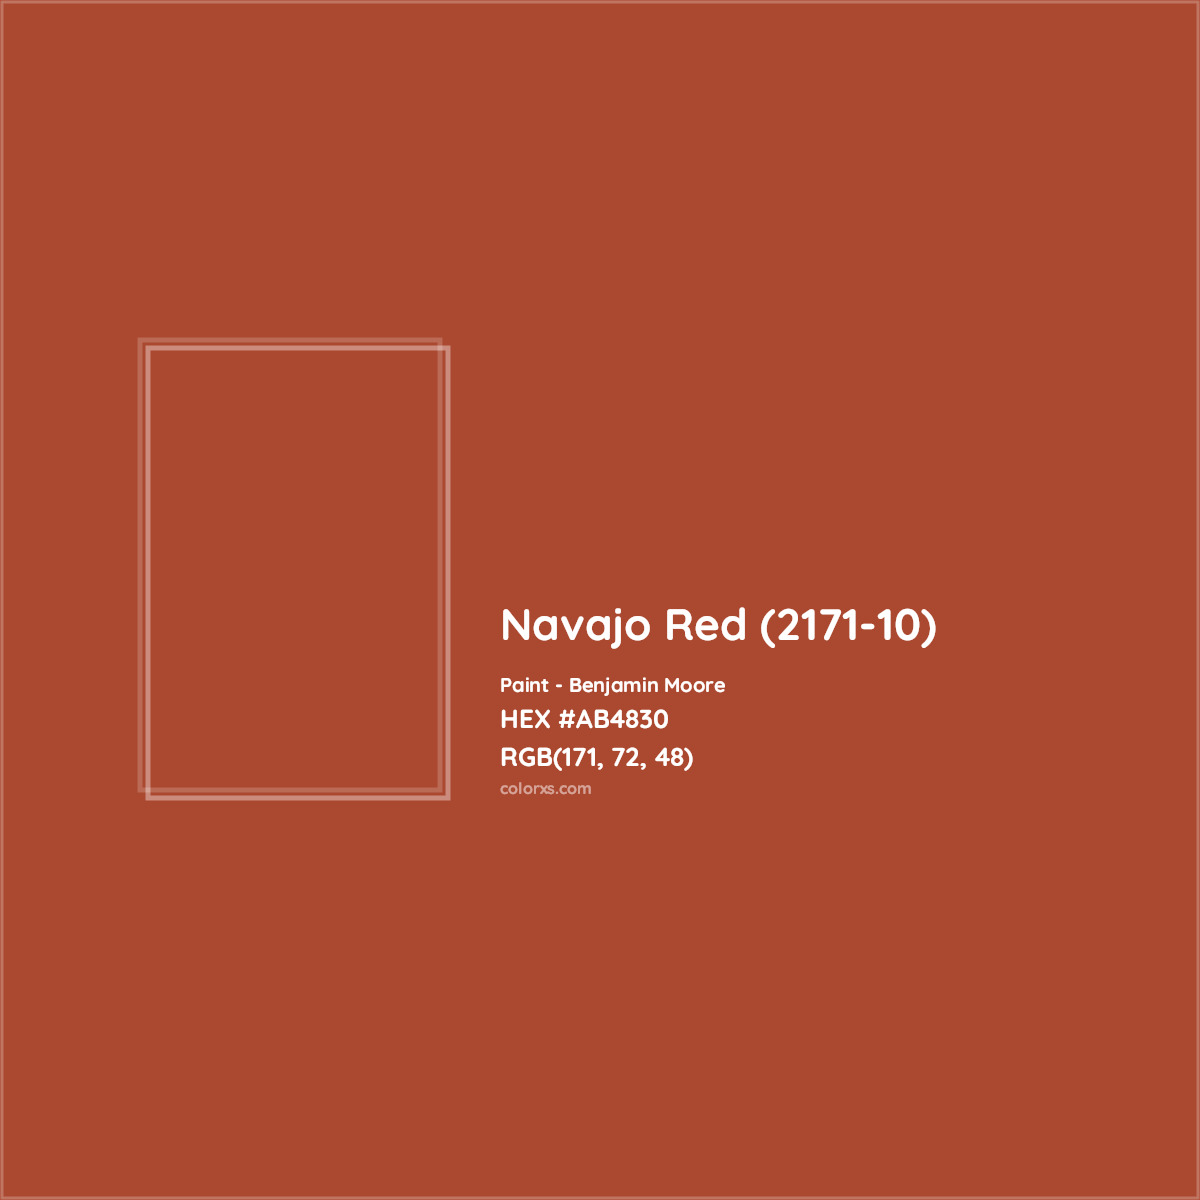 HEX #AB4830 Navajo Red (2171-10) Paint Benjamin Moore - Color Code